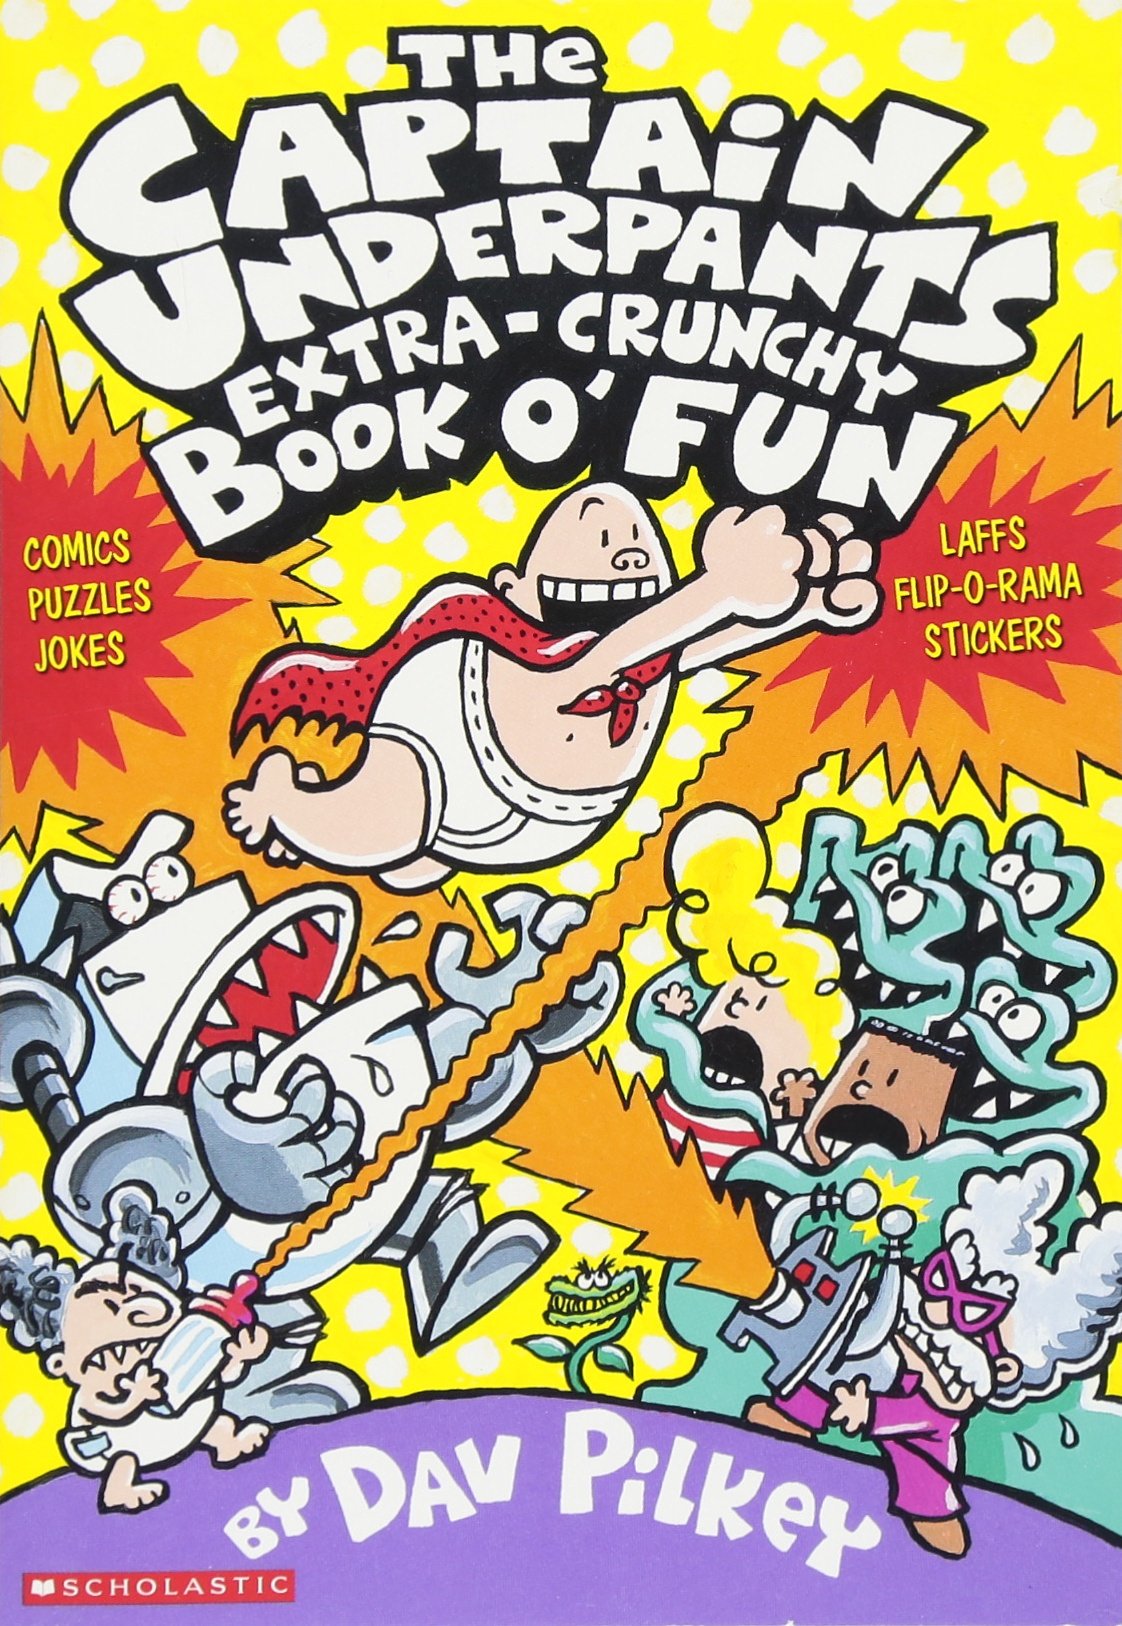 Captain Underpants: Extra Crunchy Book-Fun